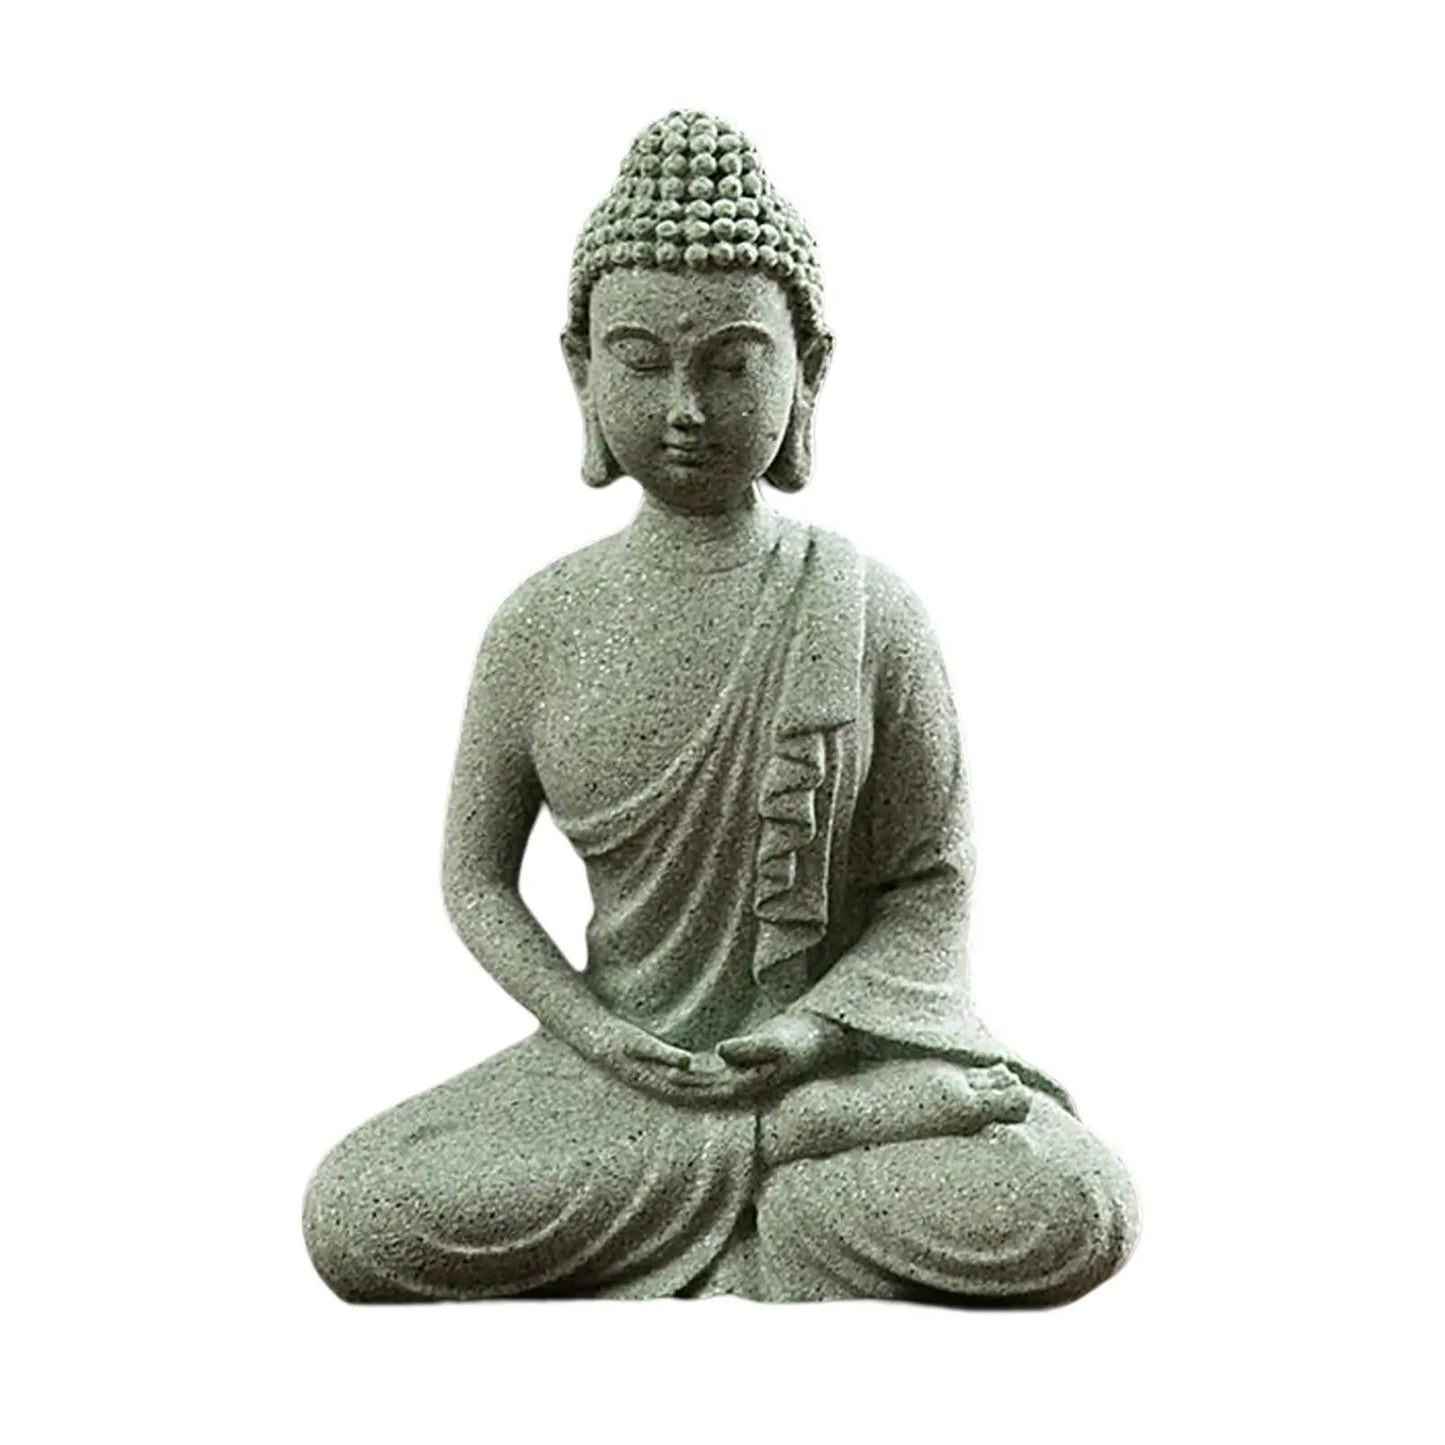 Small Buddha Statue Ornament Yoga Figurines rustic Oriental Decorative for Meditating Desktop Office Indoor Desk